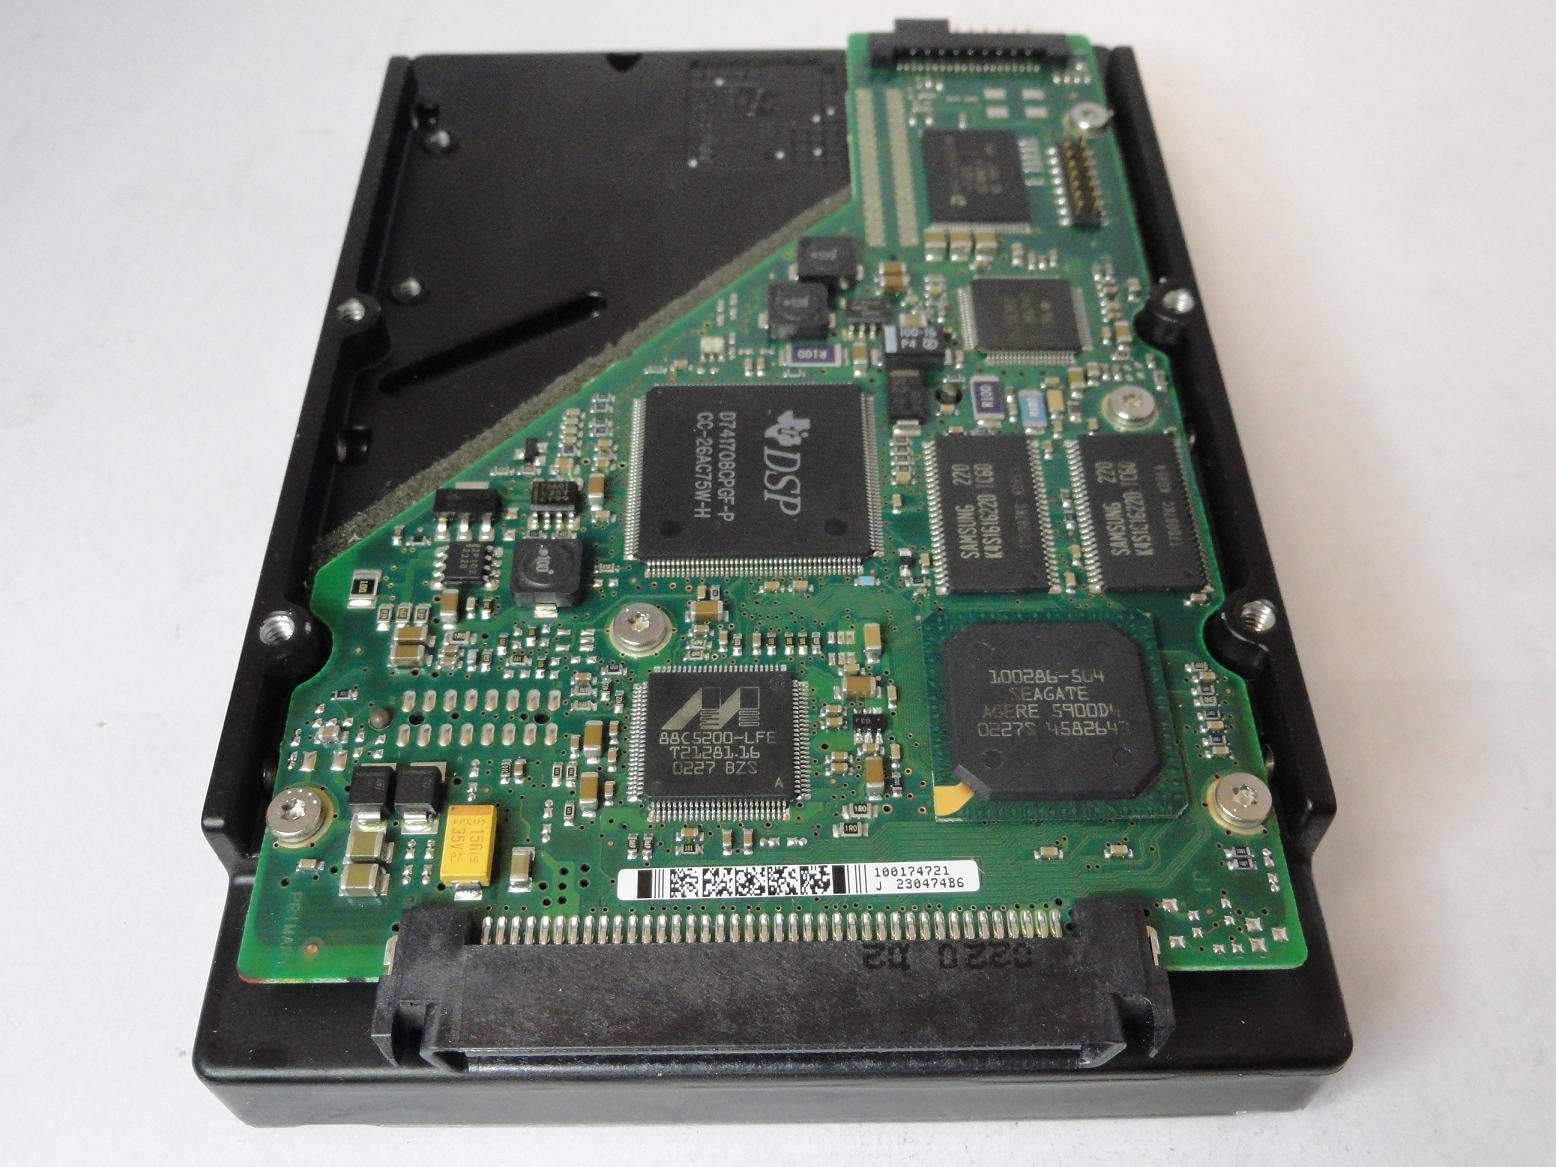 CA05904-B14000FA - Fujitsu 18Gb SCSI 80 Pin 10Krpm 3.5in HDD - Refurbished